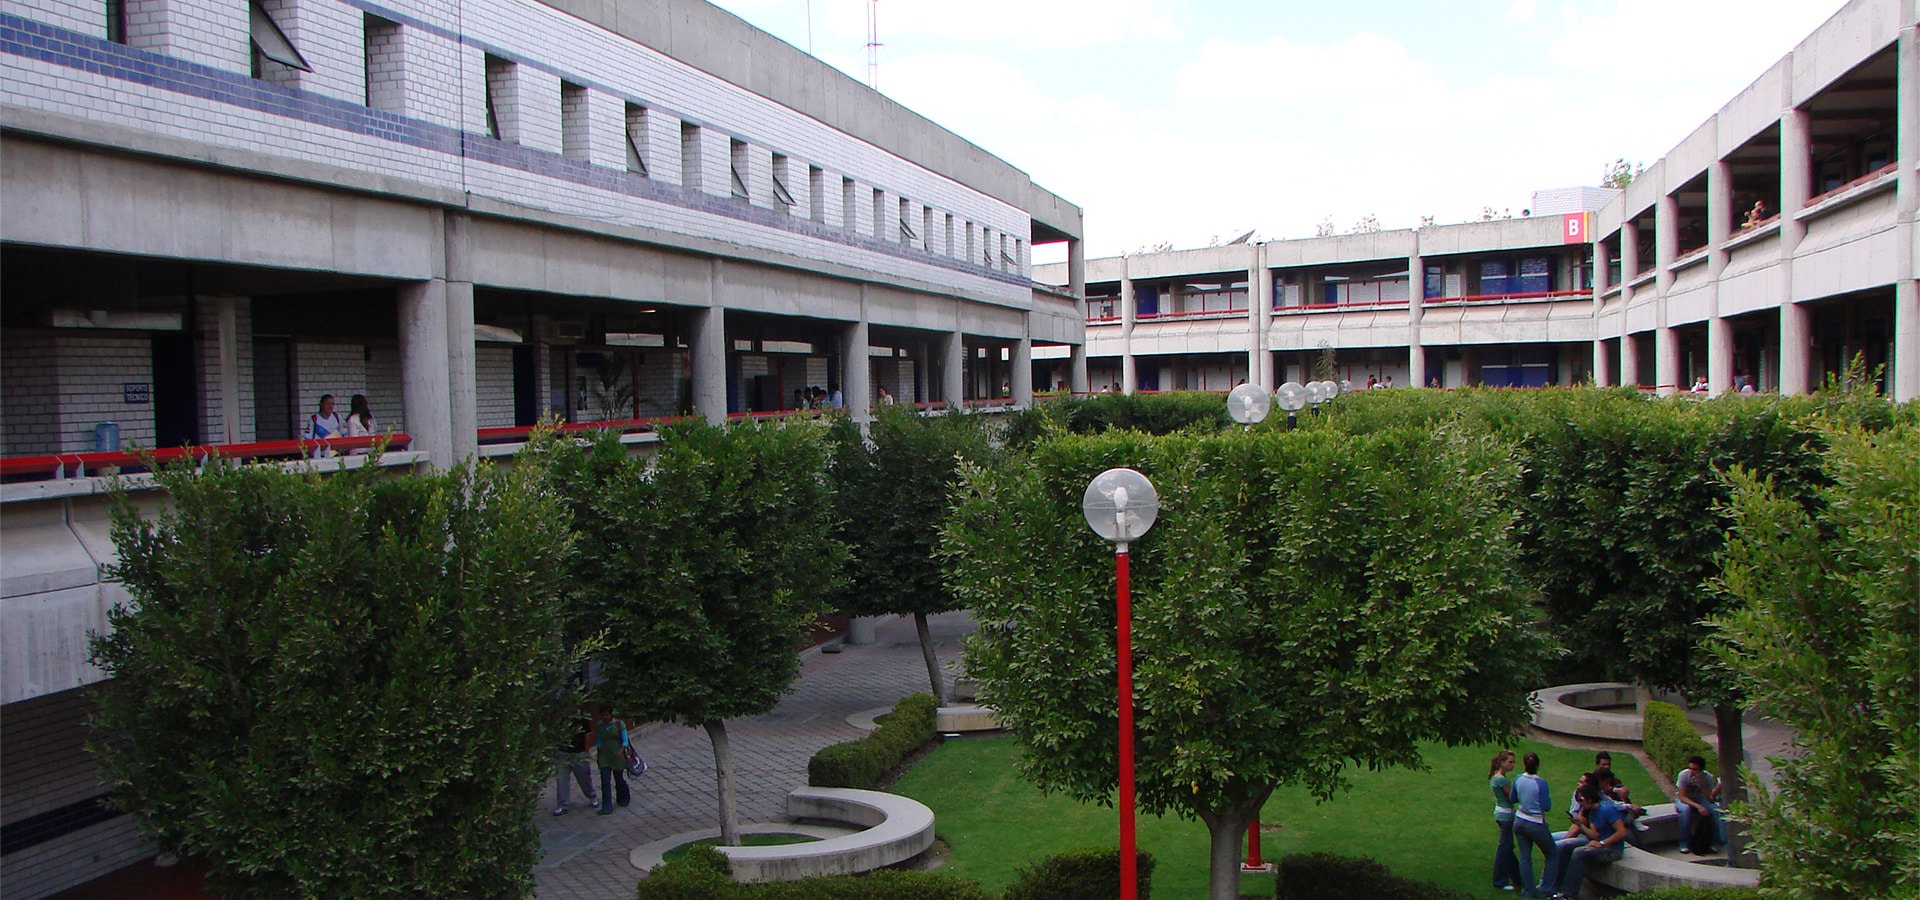 Reanudarán actividades académicas presenciales 5 universidades poblanas: SEP